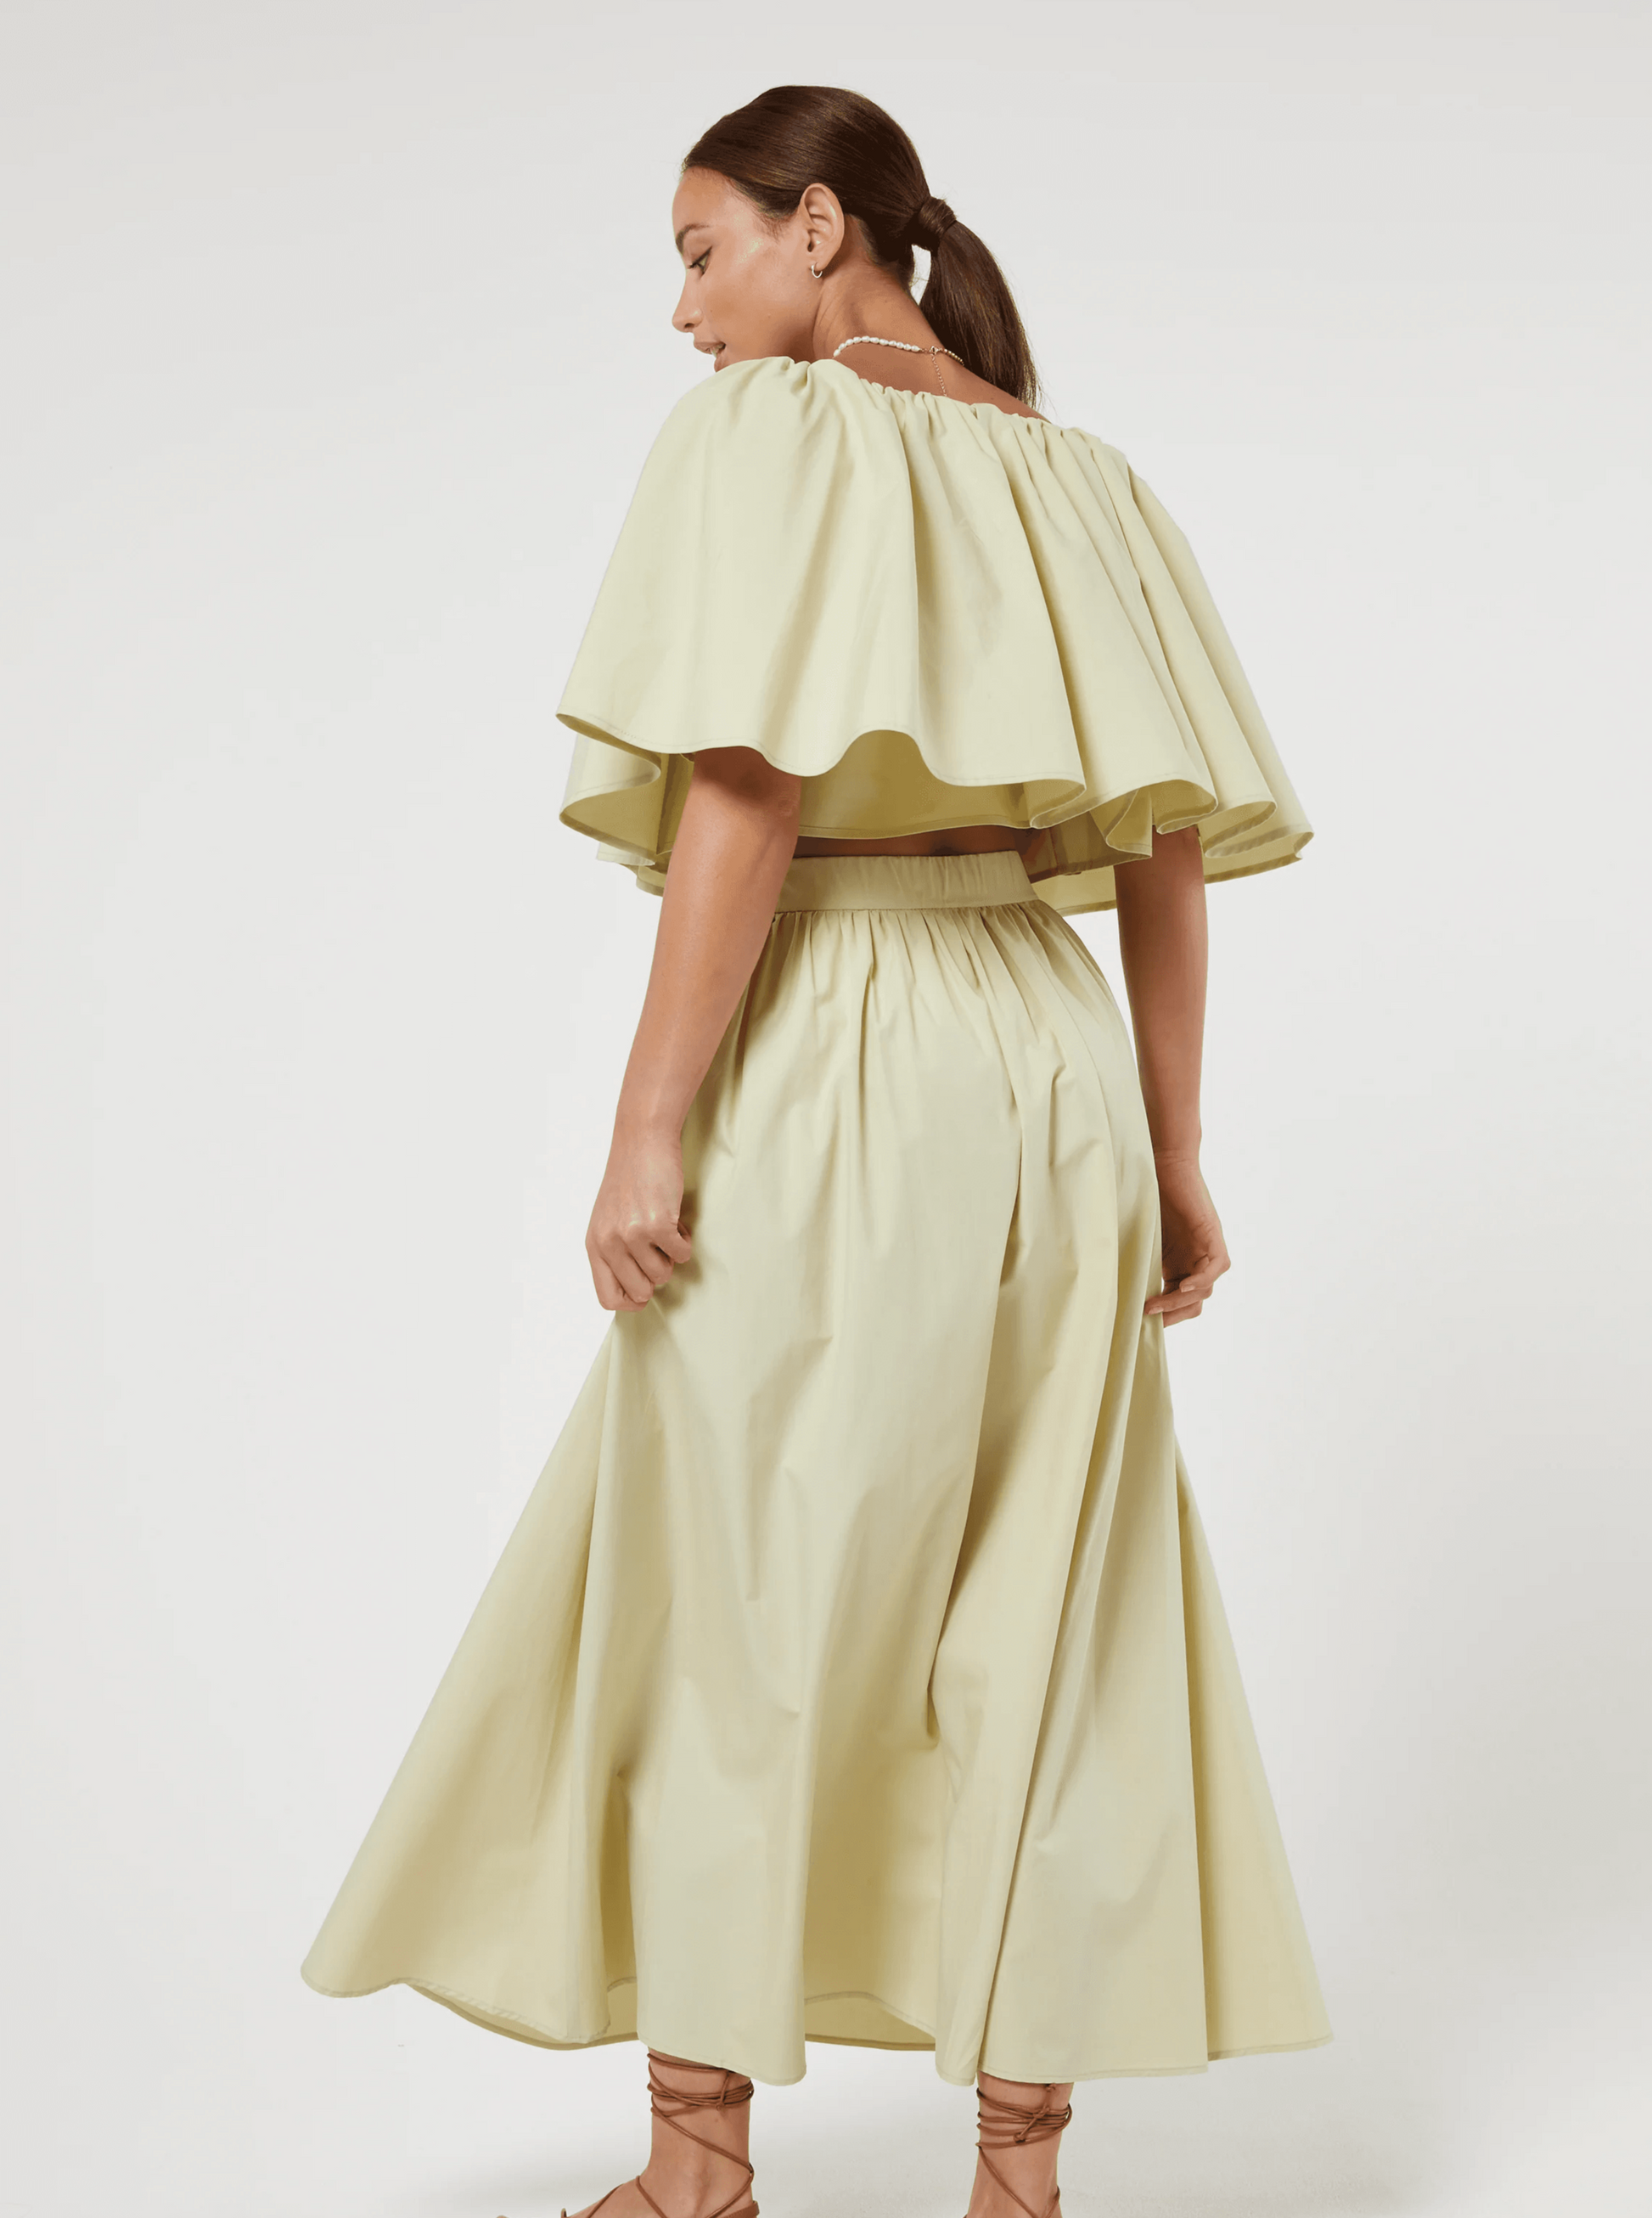 Jovonna Cipriana Skirt-S/10/38-Fi&Co Boutique